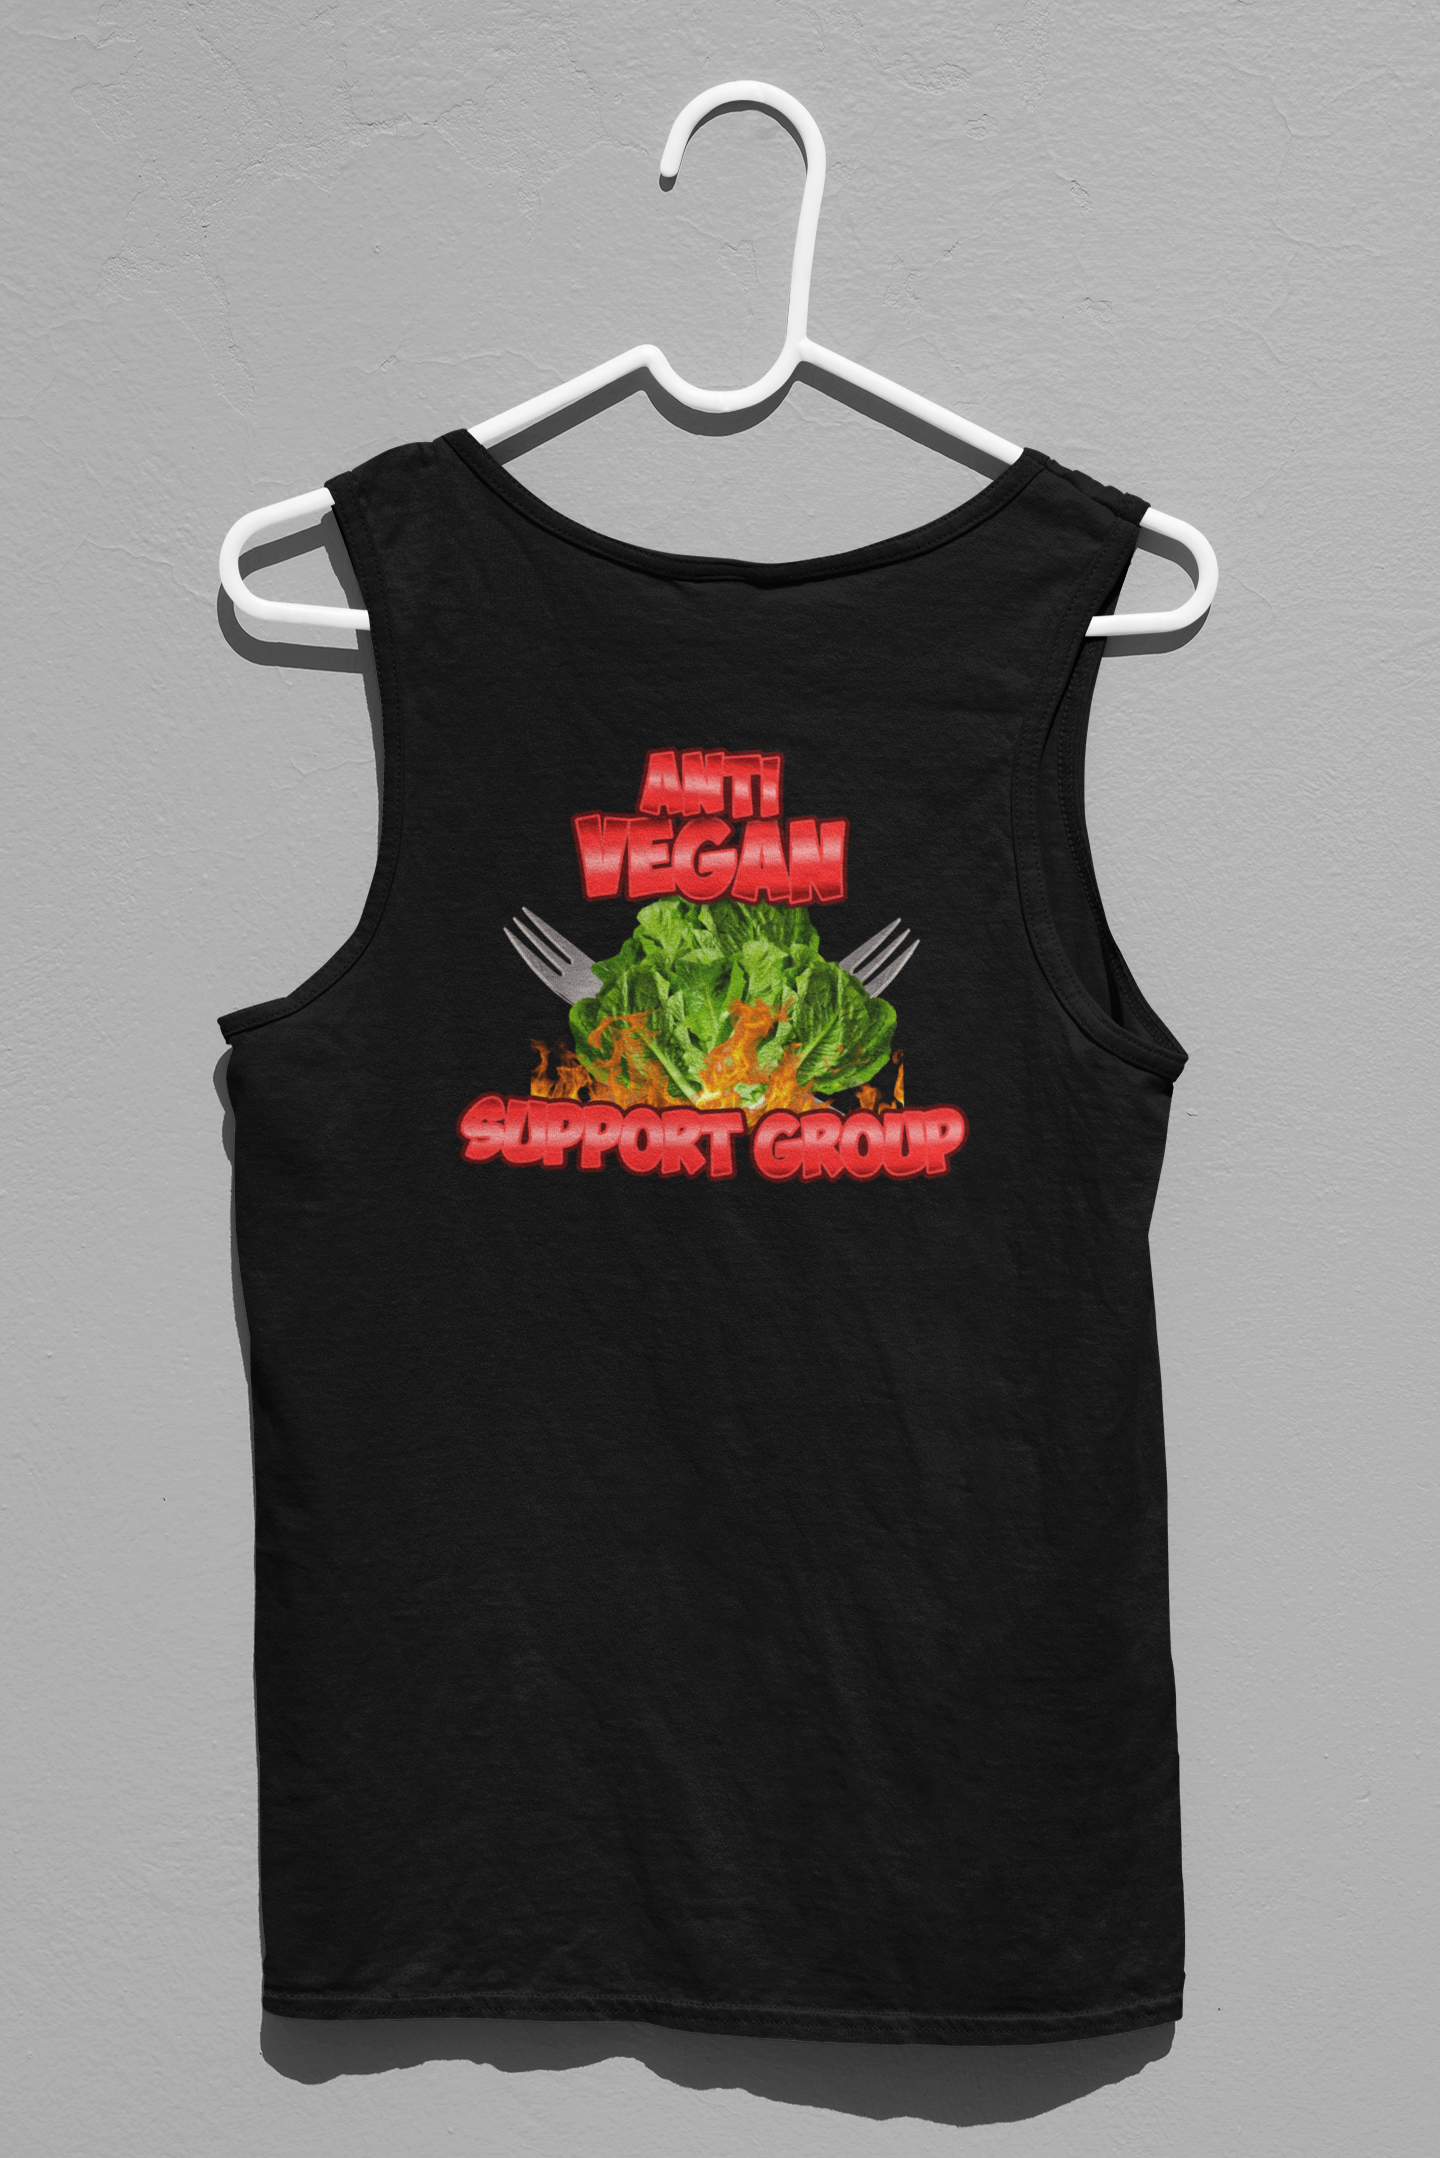 Anti Vegan Support Group Tank